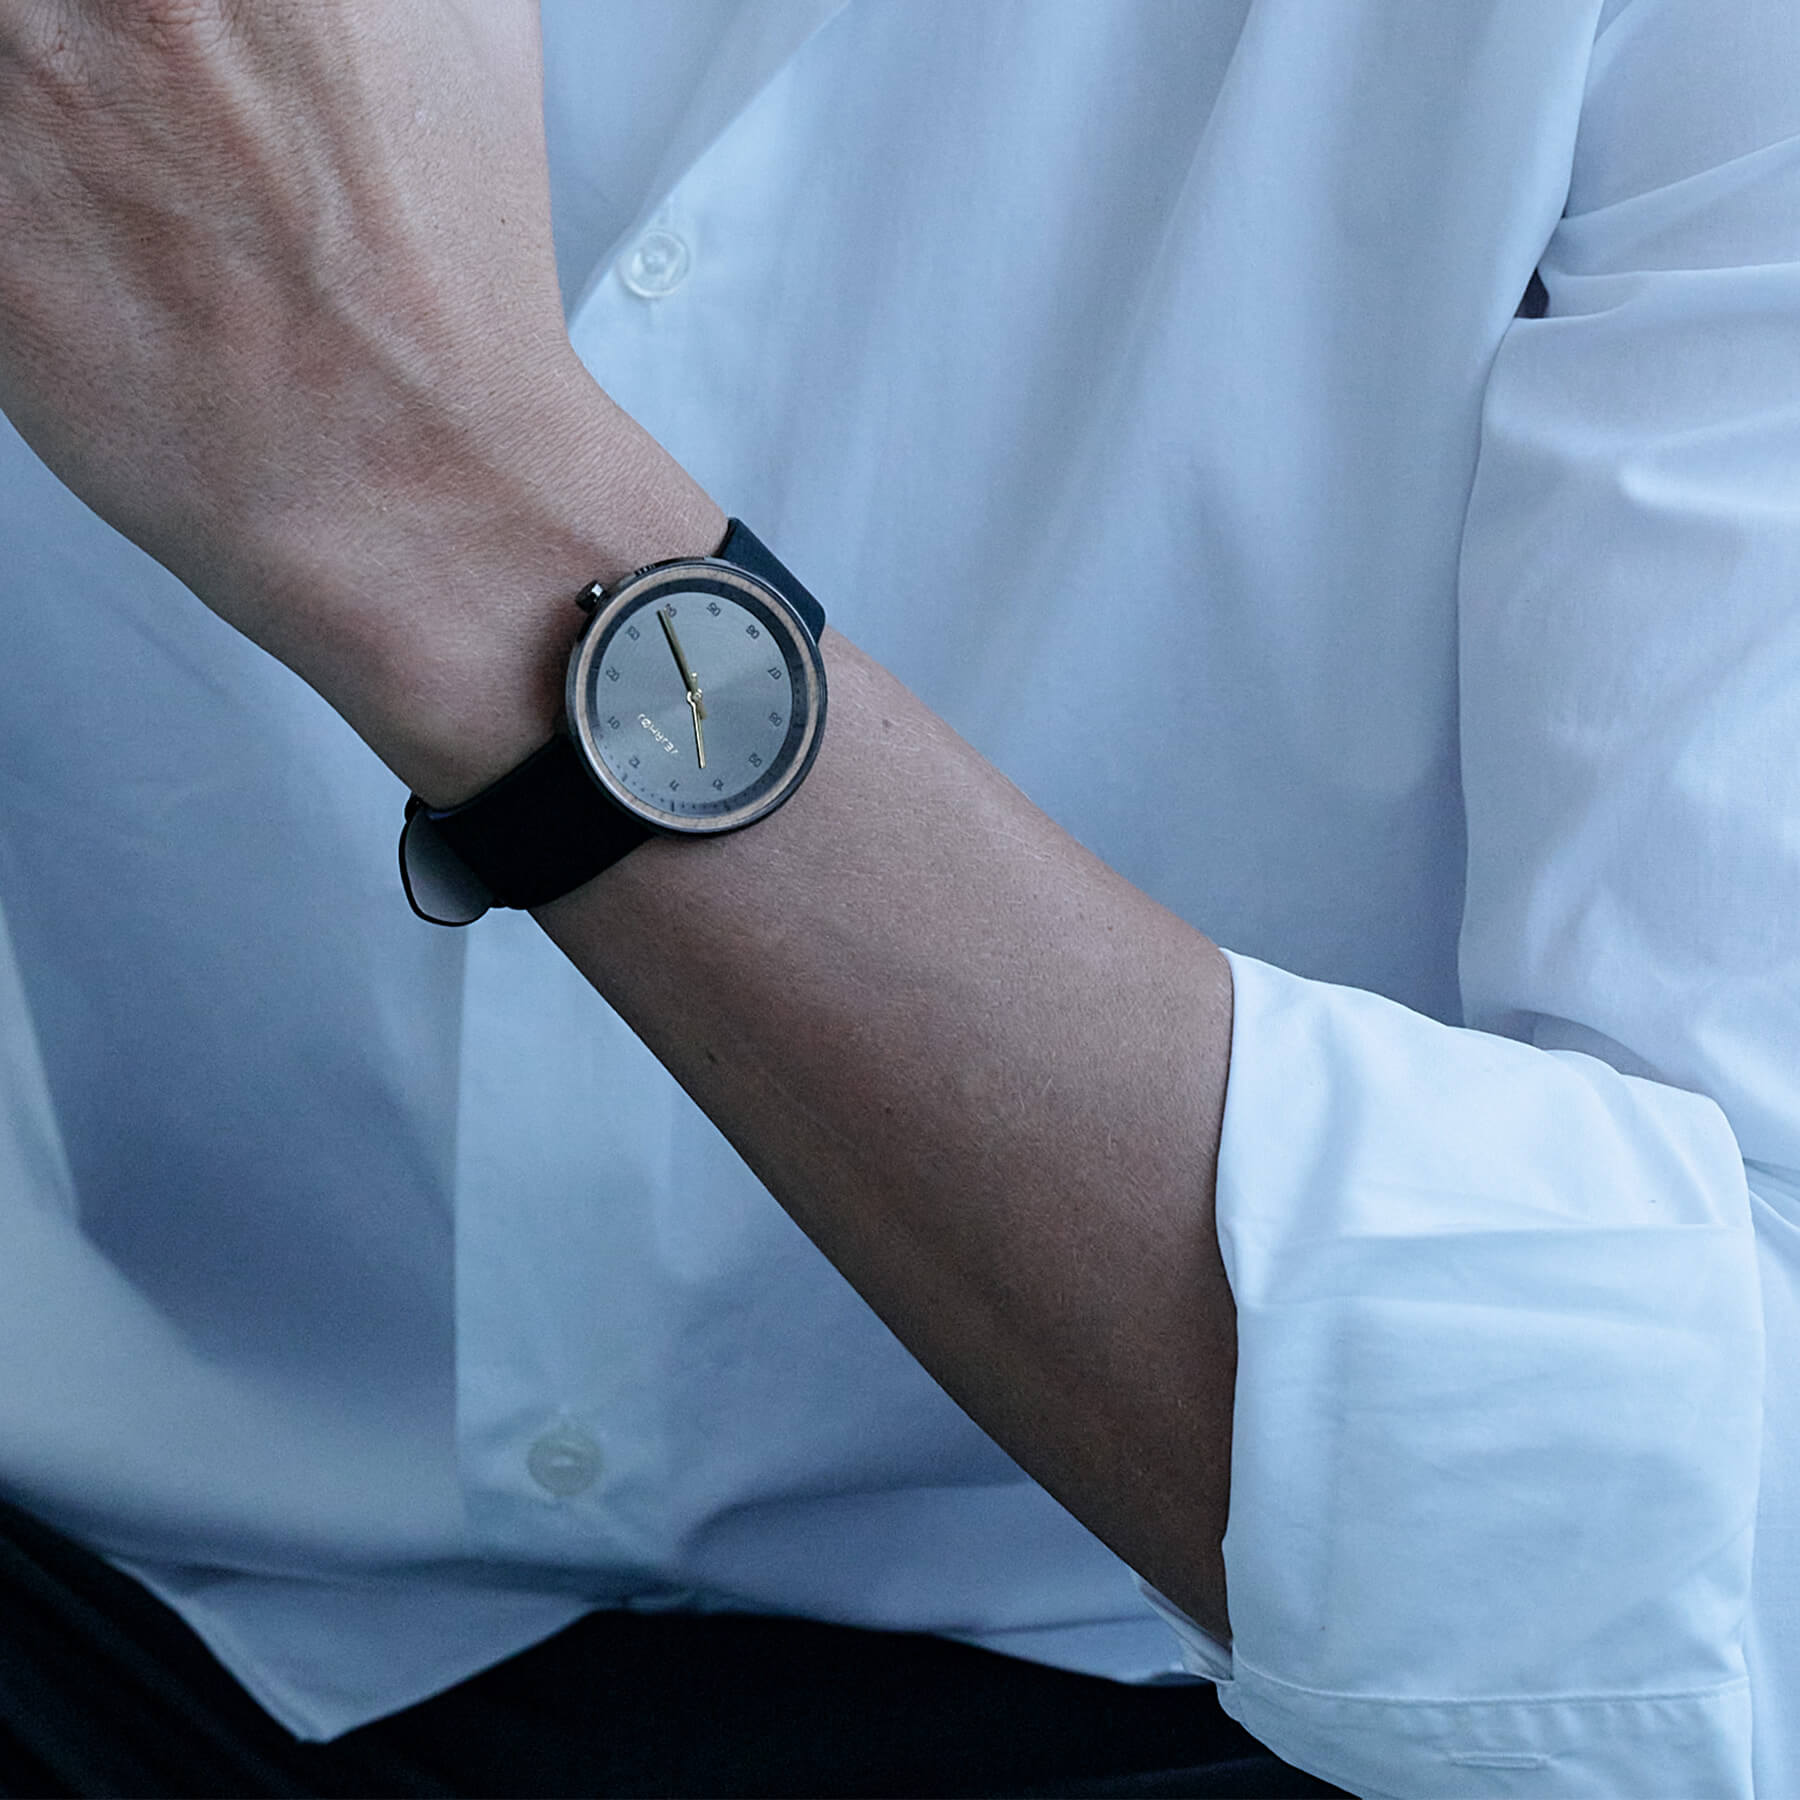 Black stylish watch with white shirt